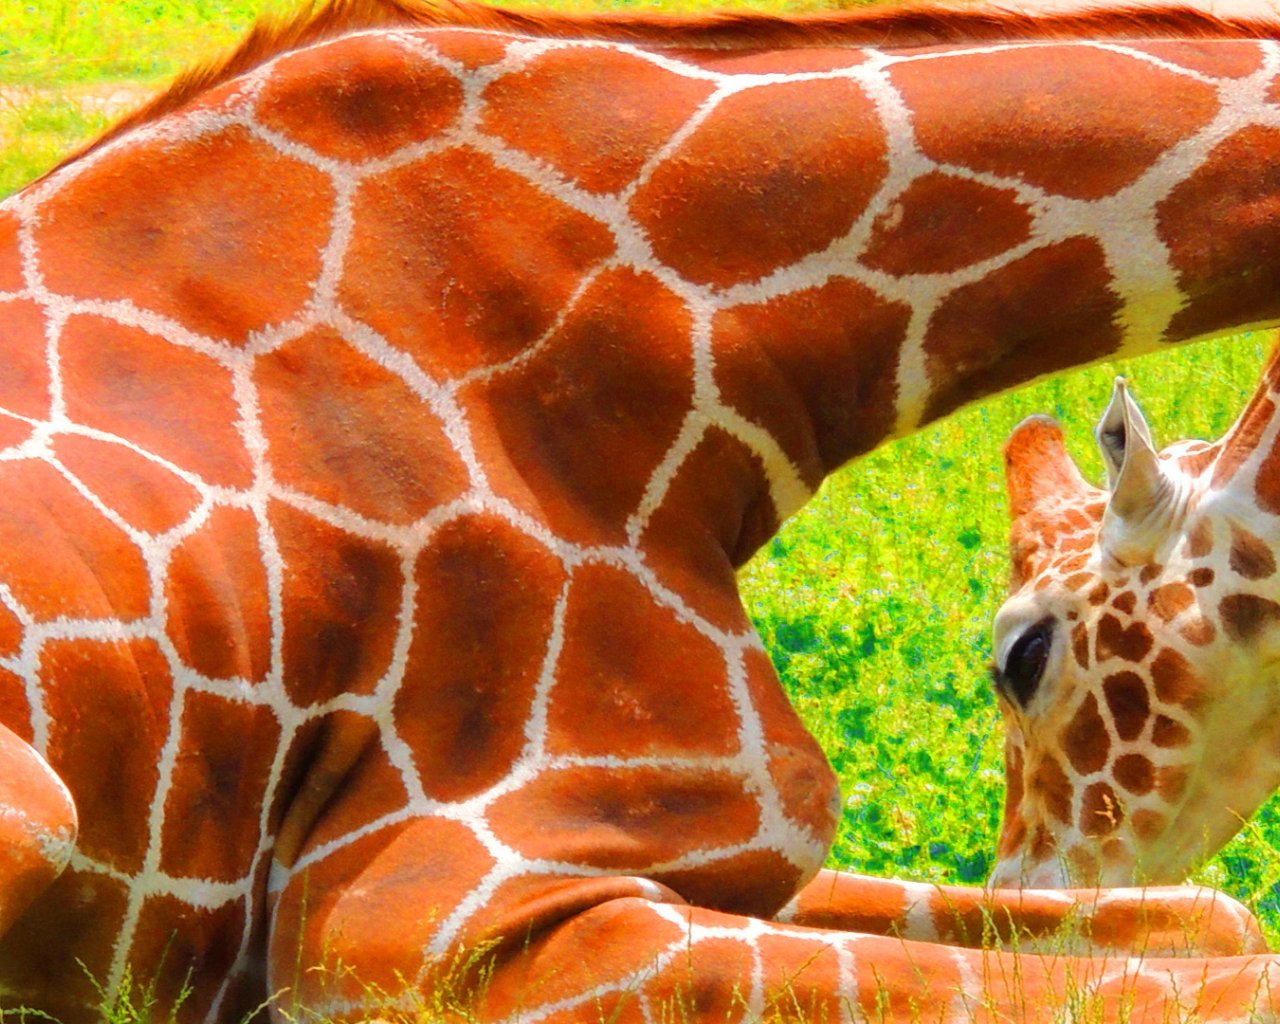 Пятна жирафа на коже фото